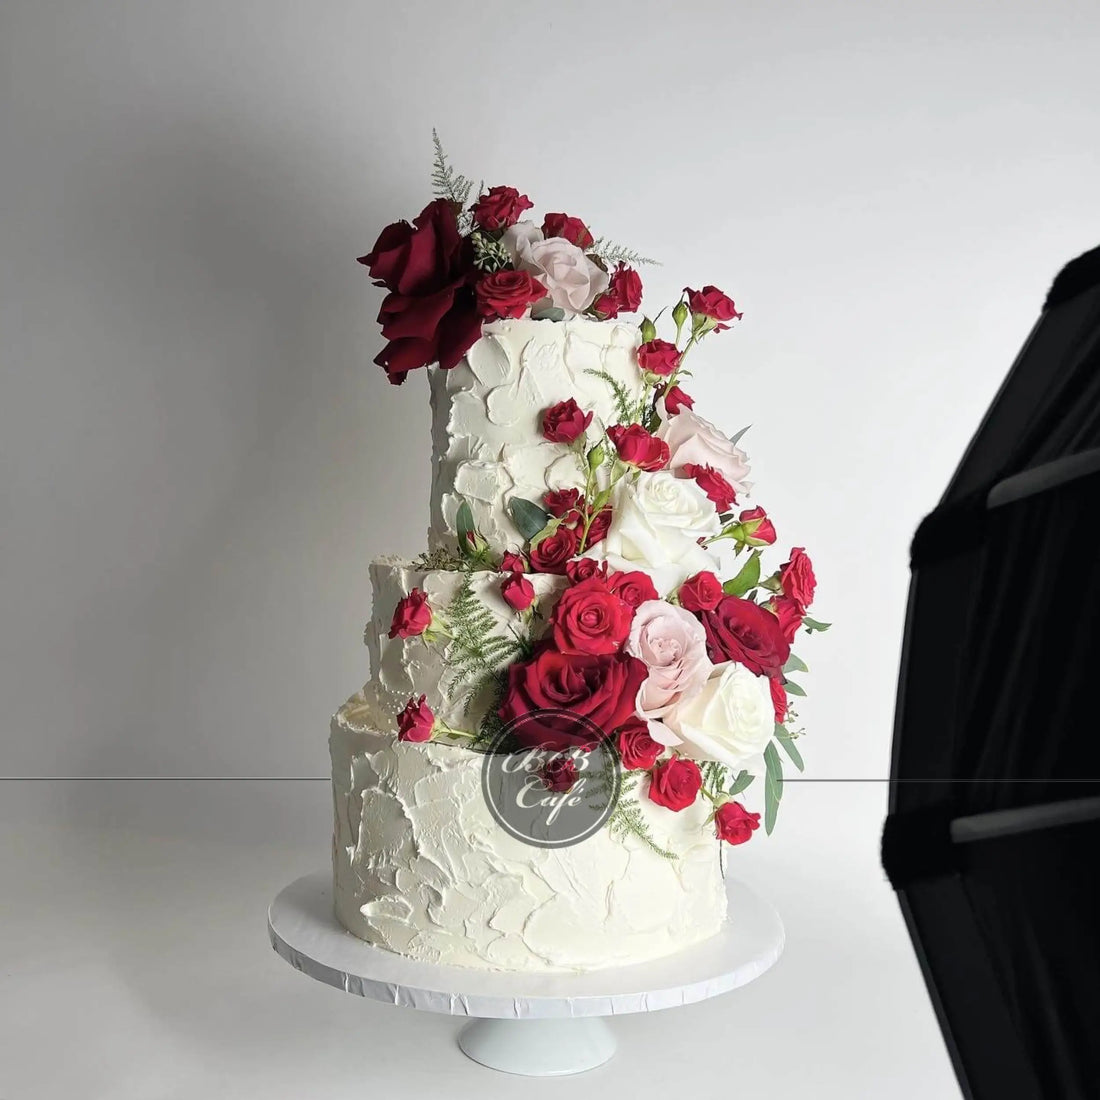 Kaila video - romance &amp; palette knife - wedding cake